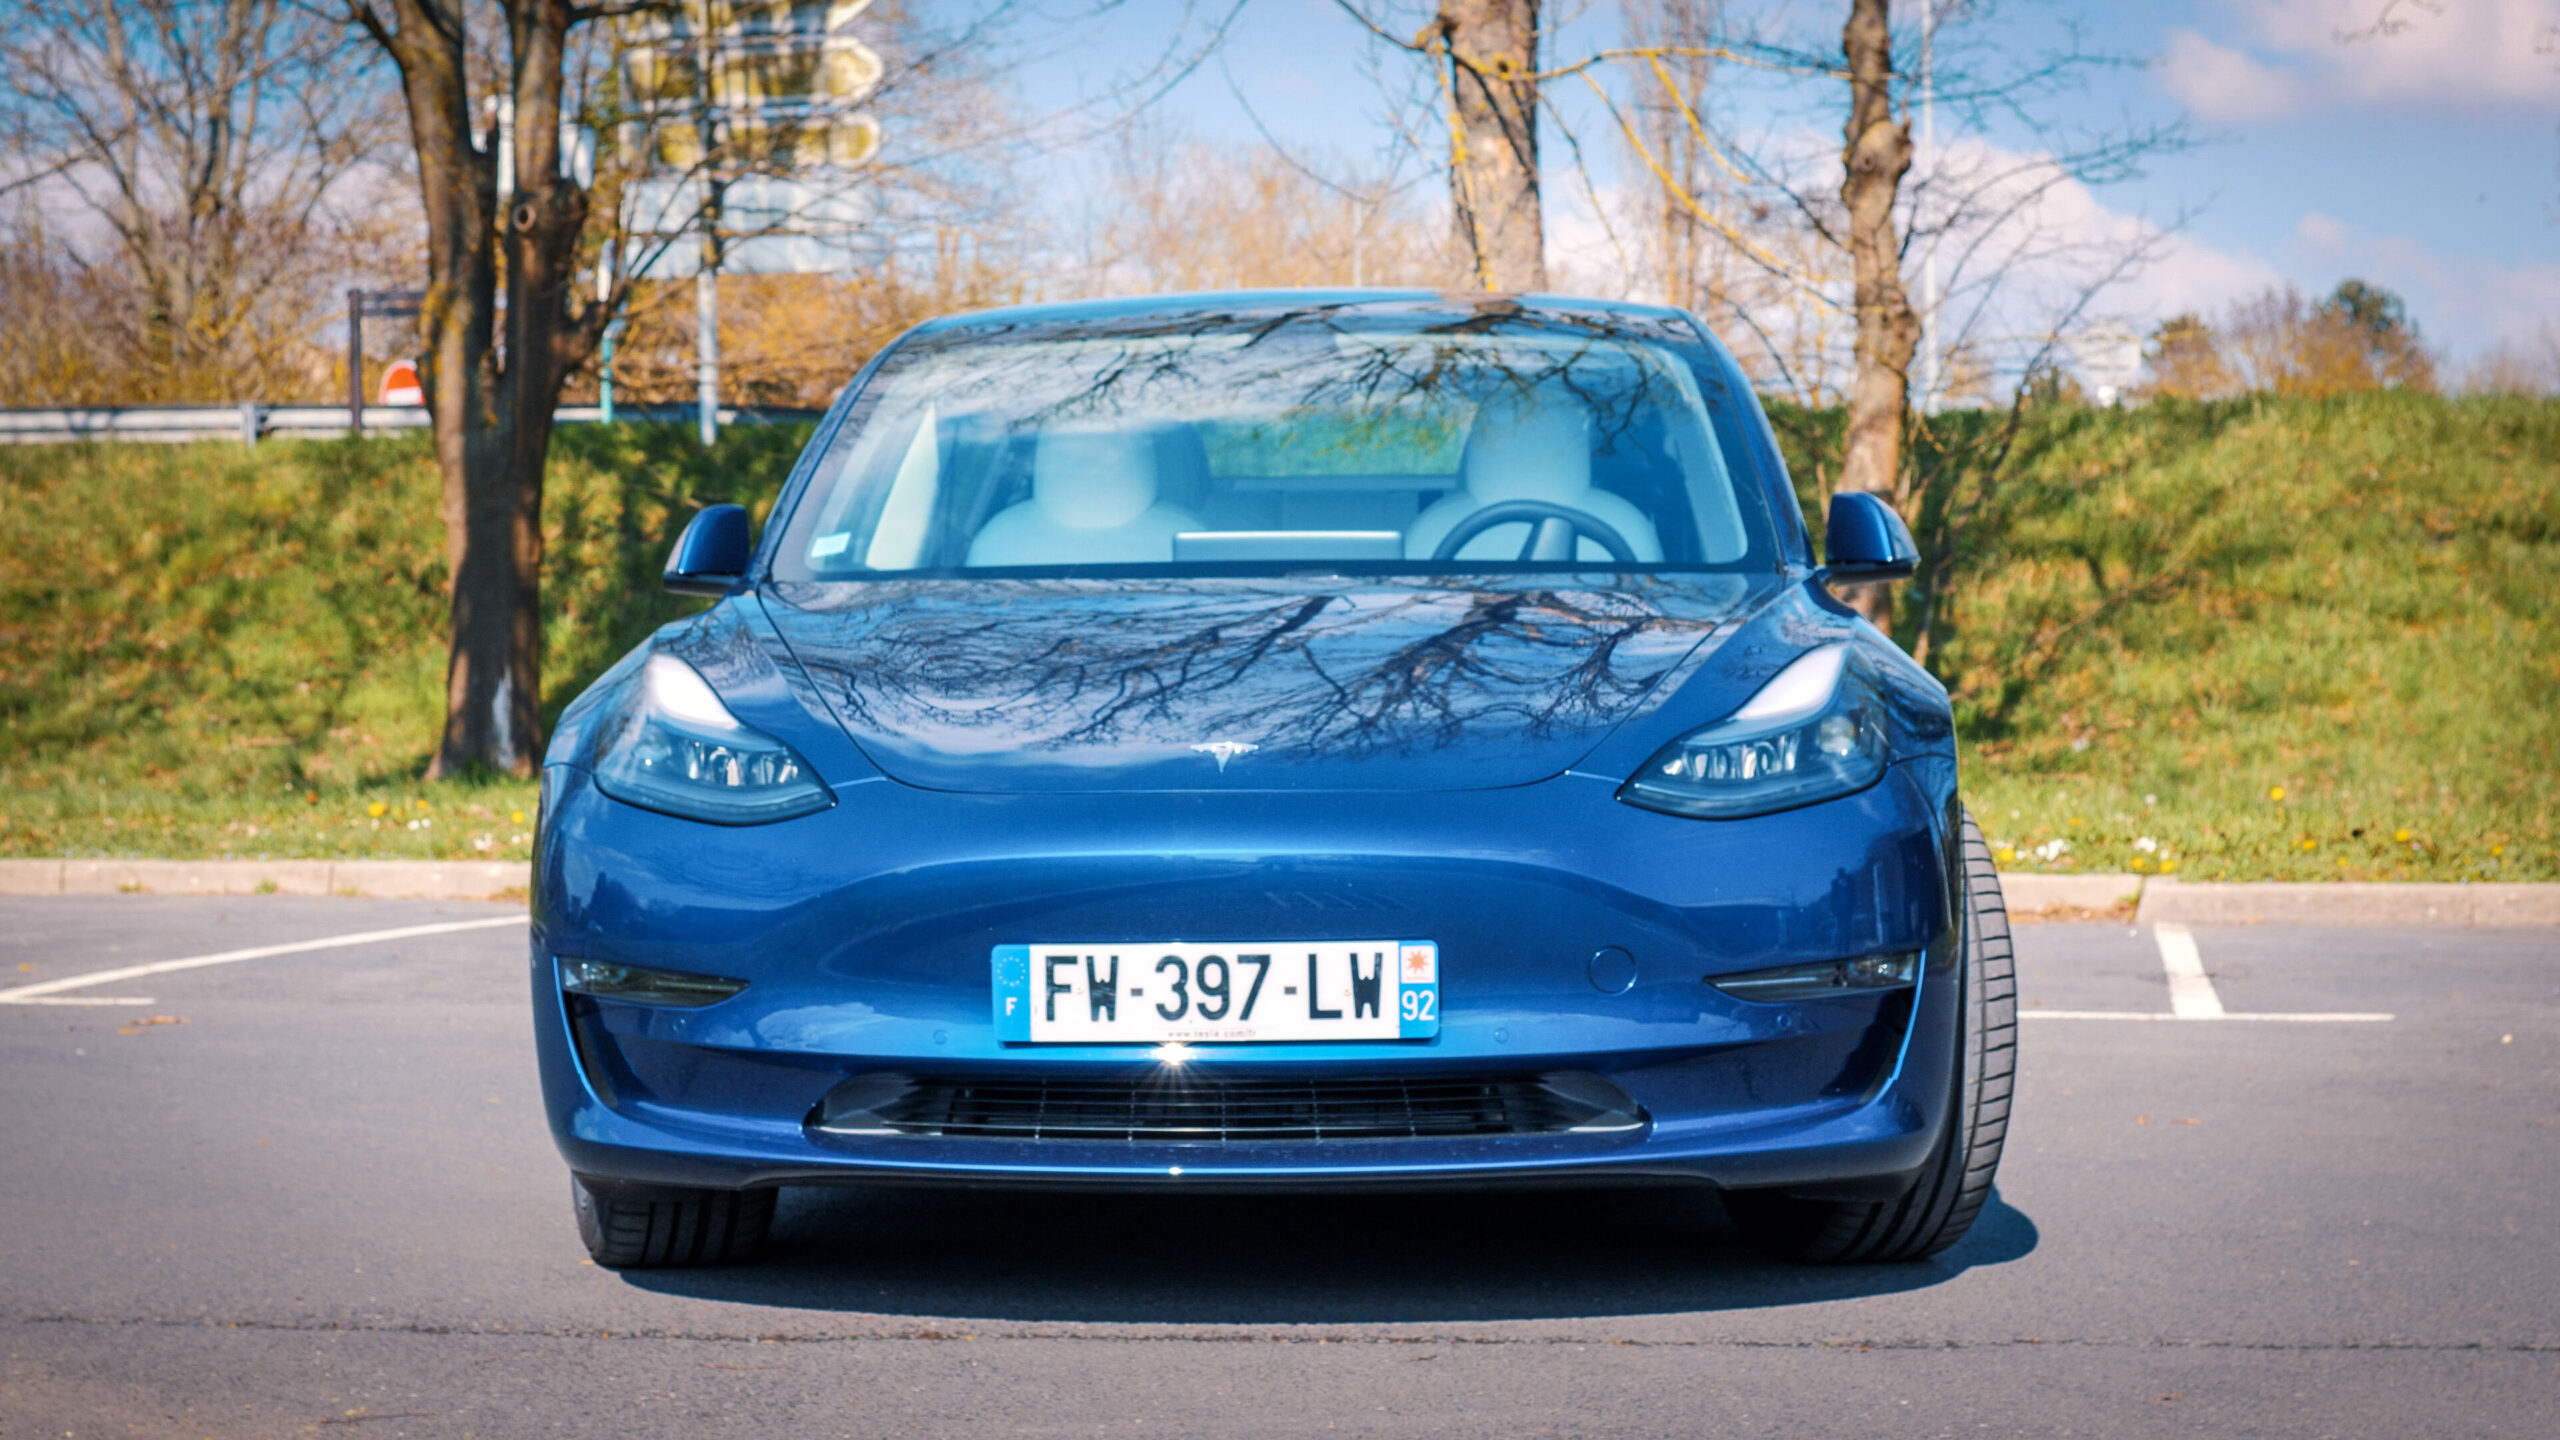 Essai de la Tesla Model 3 (2021) : plus abordable, plus peaufinée - Numerama